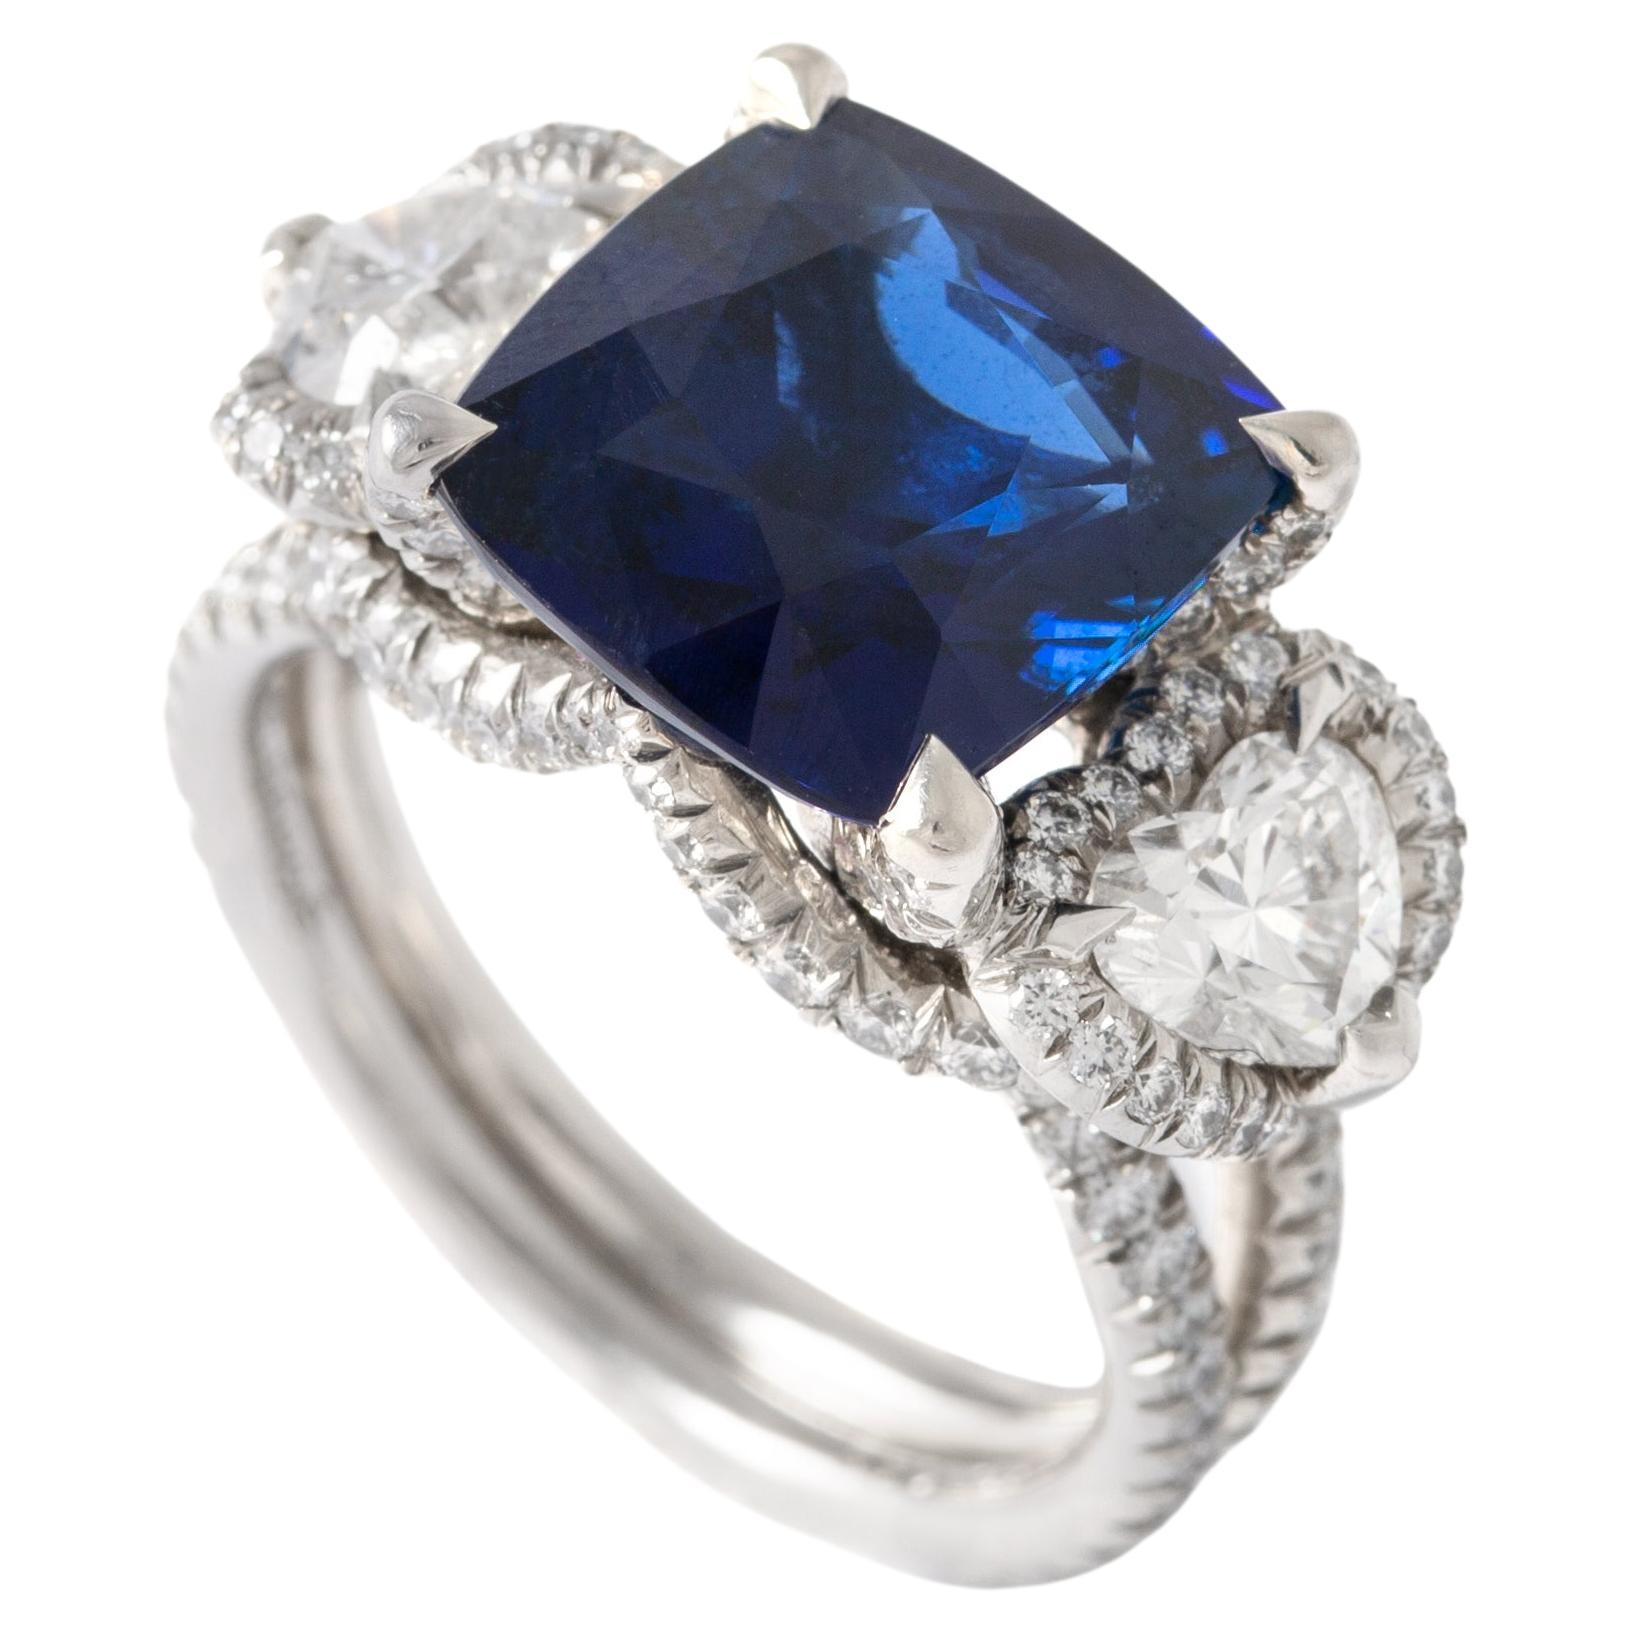 Fabergé 6.01 Carat Burmese Non Heated Natural Sapphire Diamond Ring